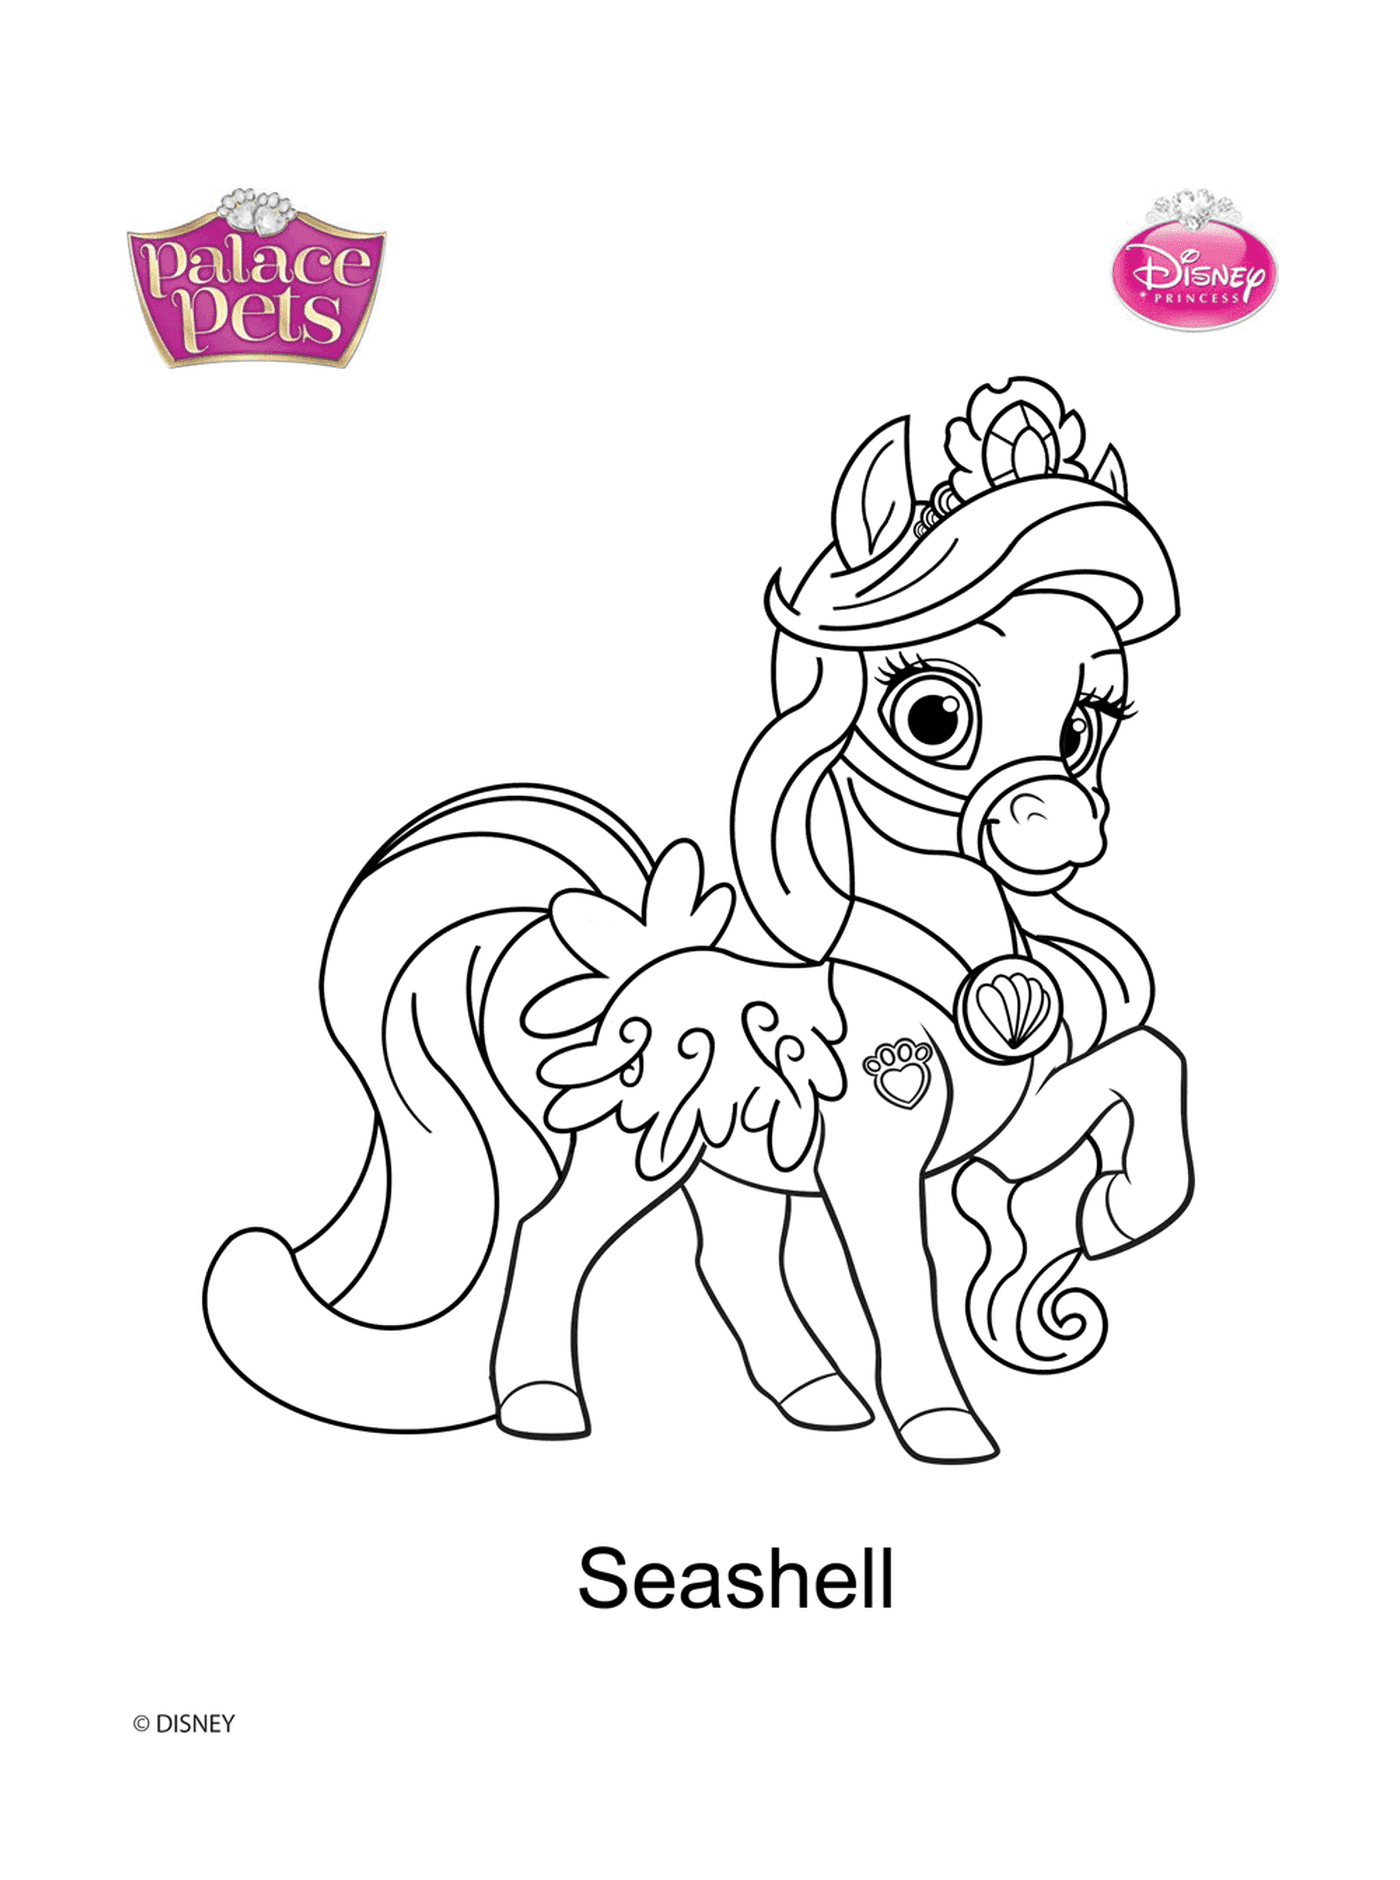  Palace farts, Seashell Princess Pony 